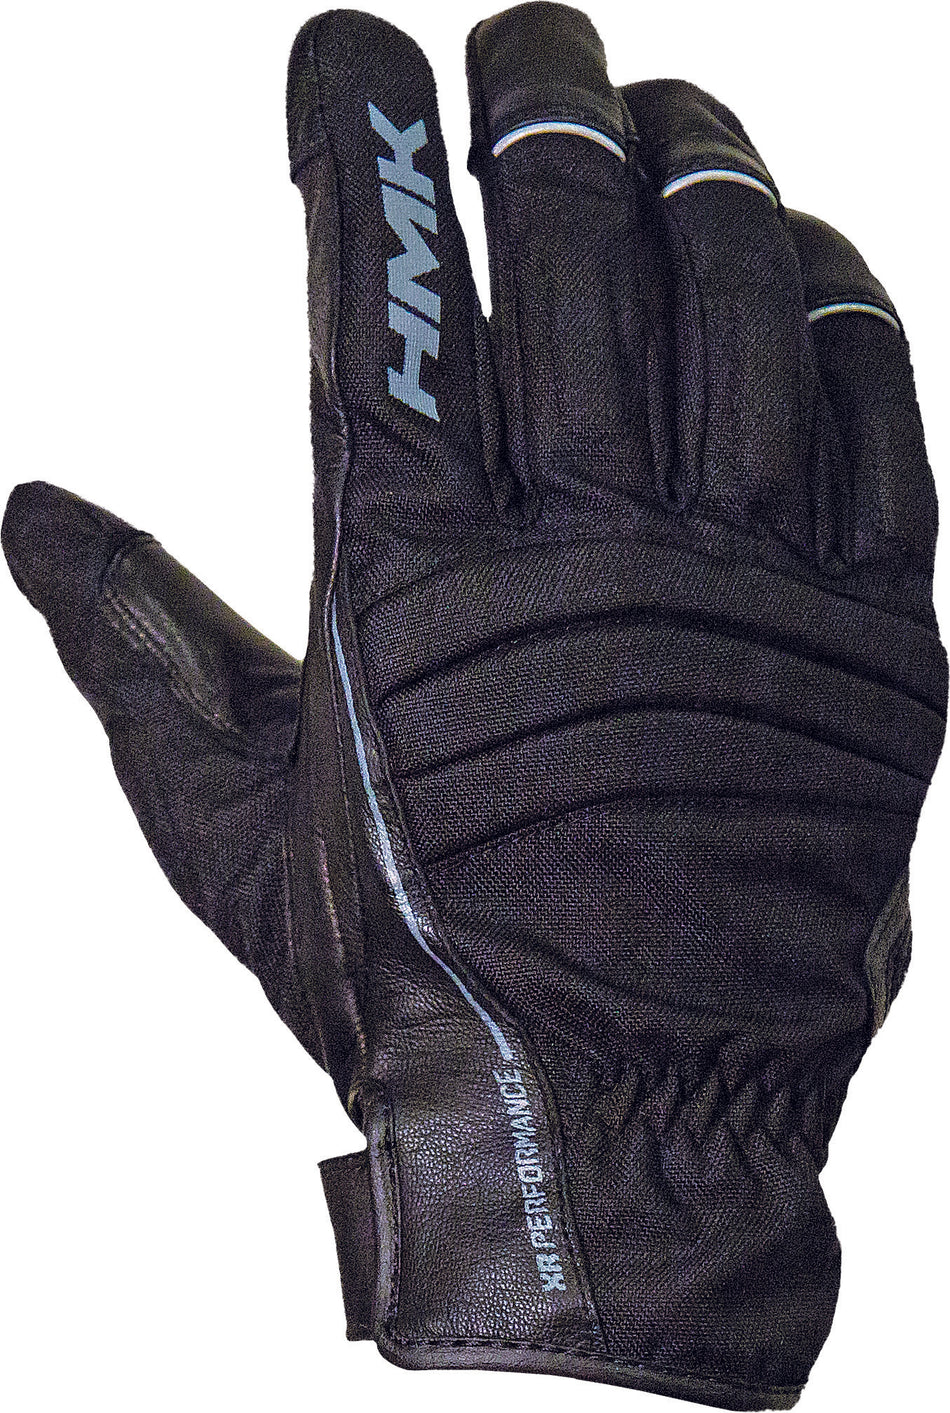 HMK Team Glove Lg S/M Black HM7GTEABL